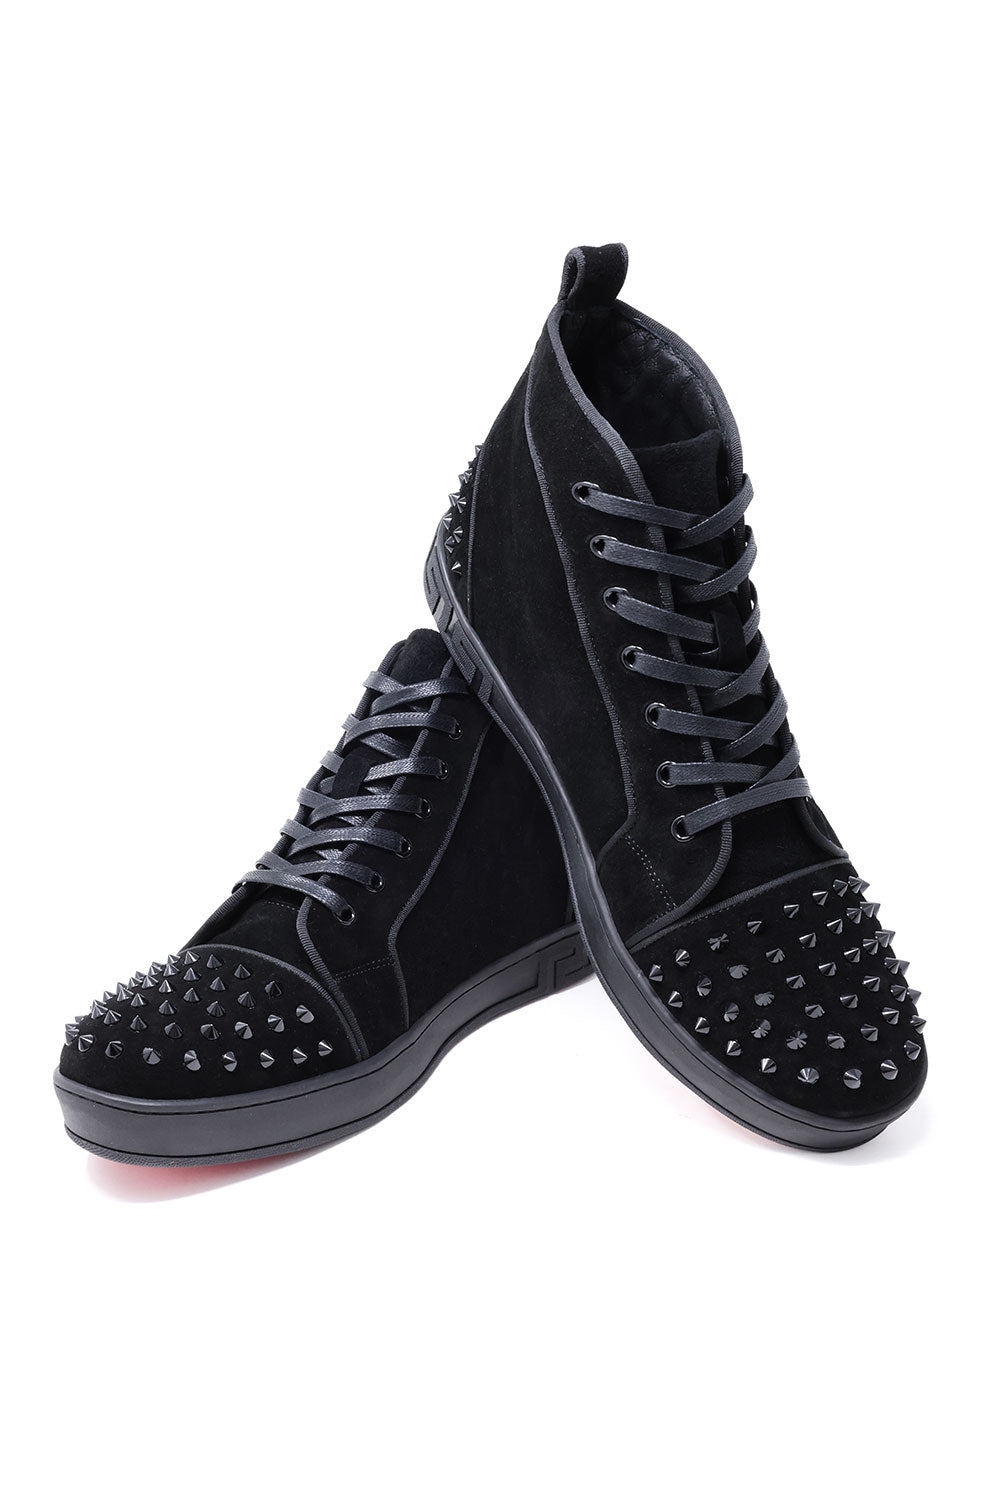 Barabas Men's Spike Design Luxury Suede High-Top Sneaker SH732 Black